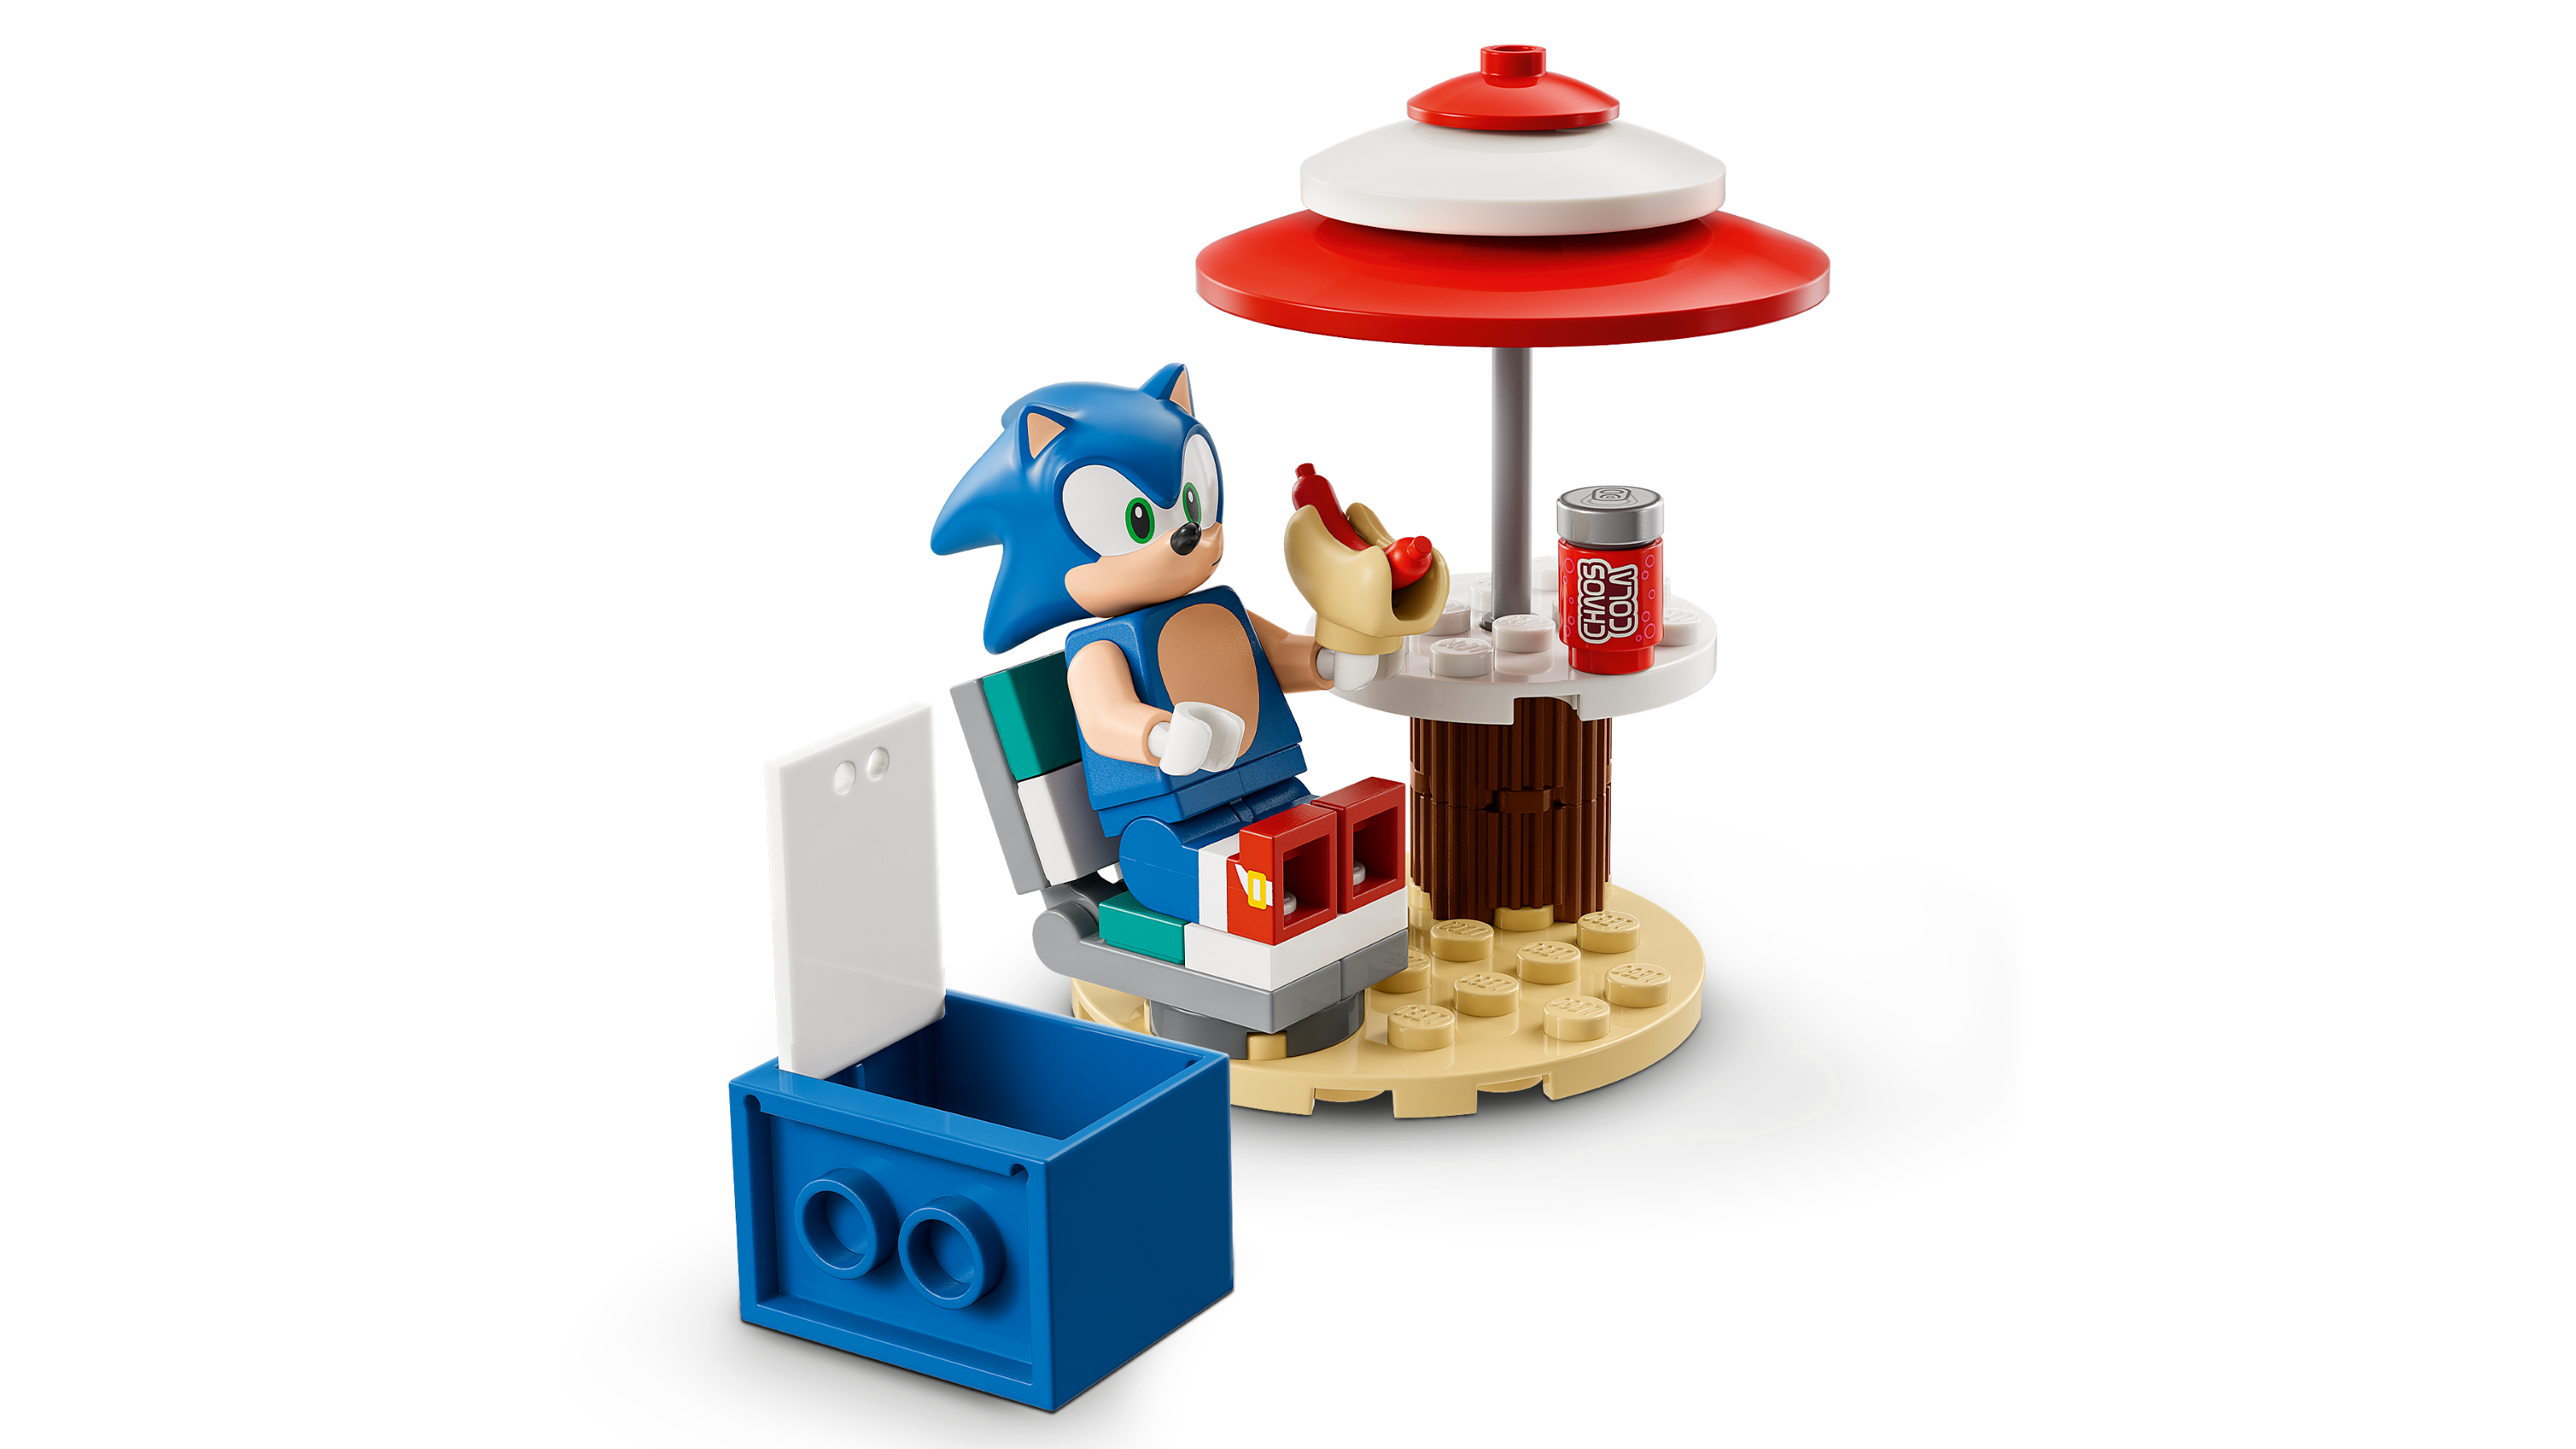 LEGO® Sonic the Hedgehog™ Sonic’s Speed Sphere Challenge 76990 Building Set  (292 Pieces)